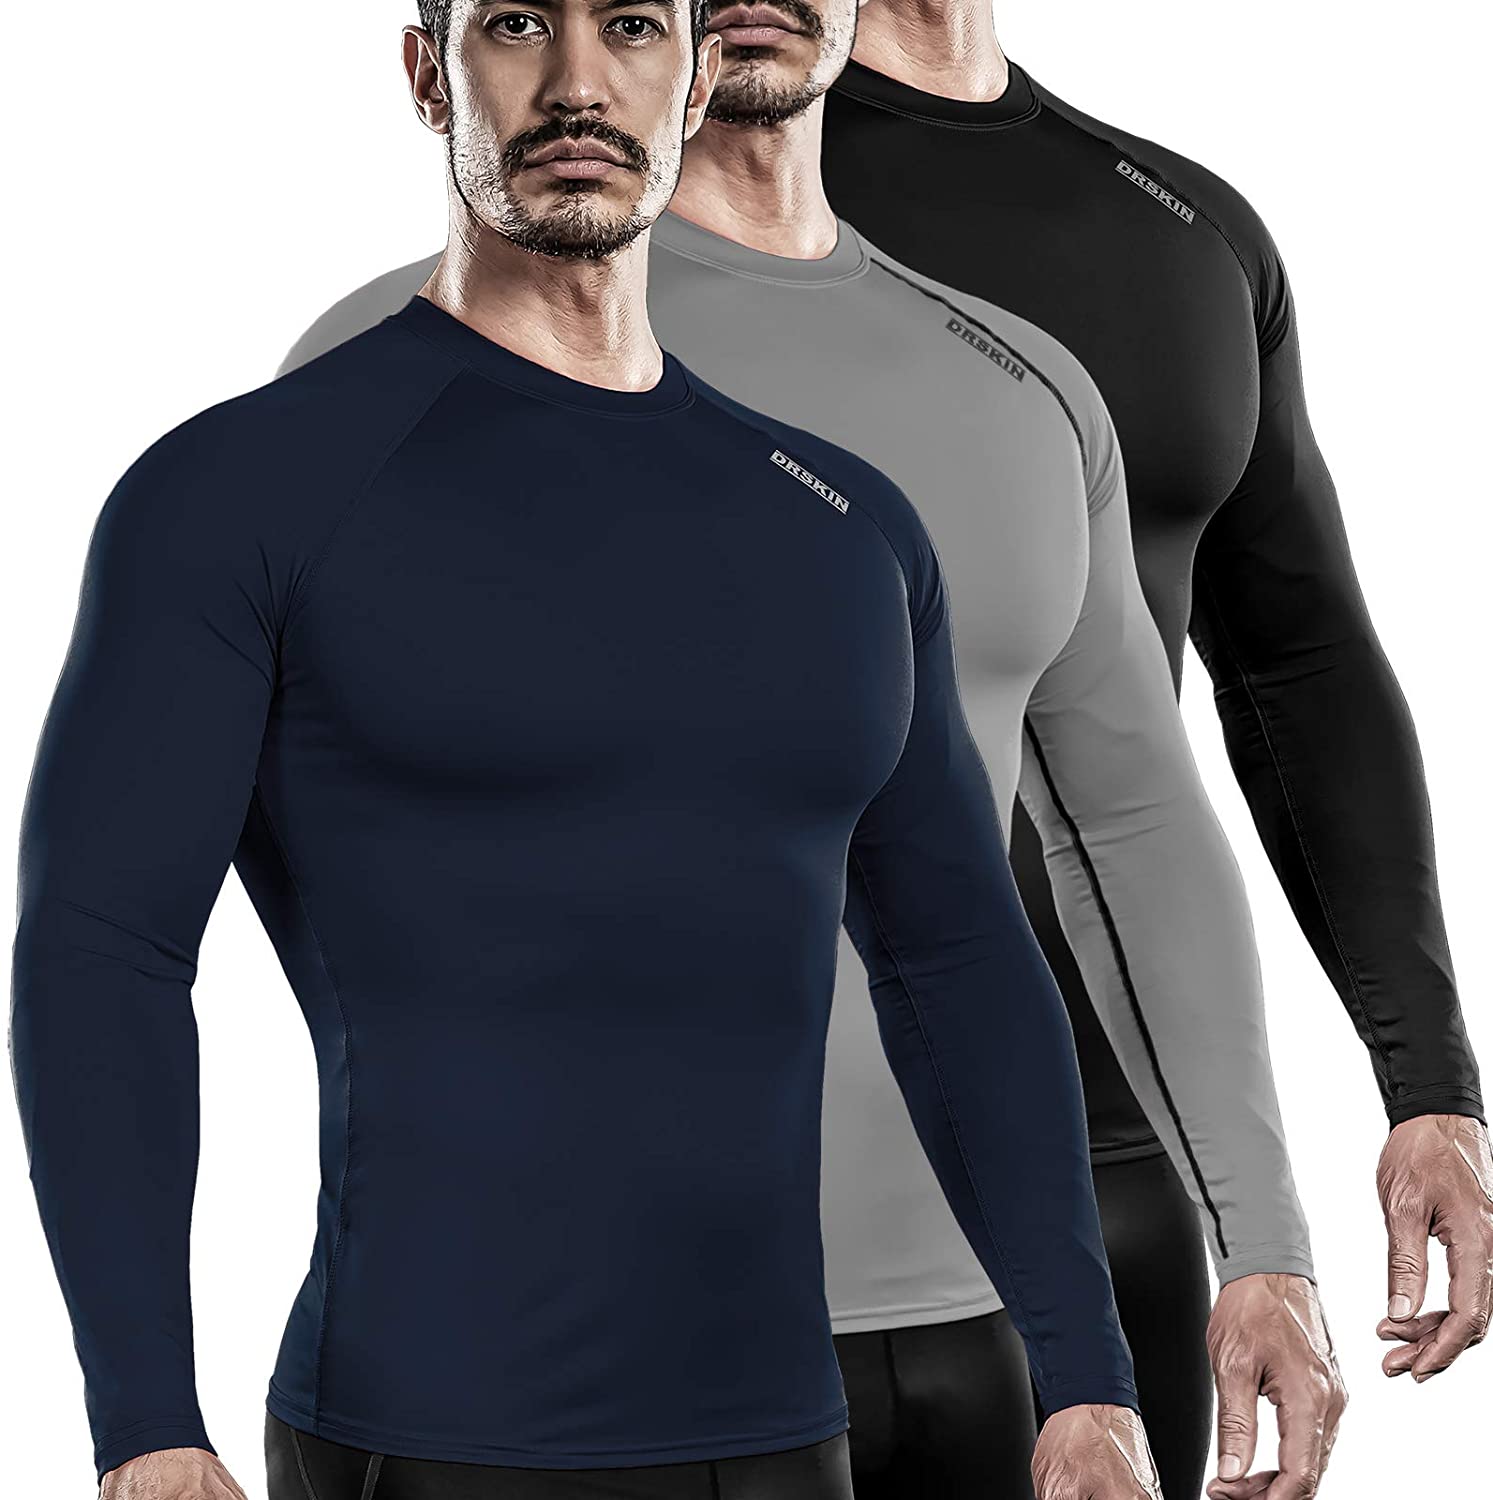 DRSKIN Men's Compression Shirts Top Long Sleeve Sports Running Workout Athletic Gym Baselayer Rashguard 